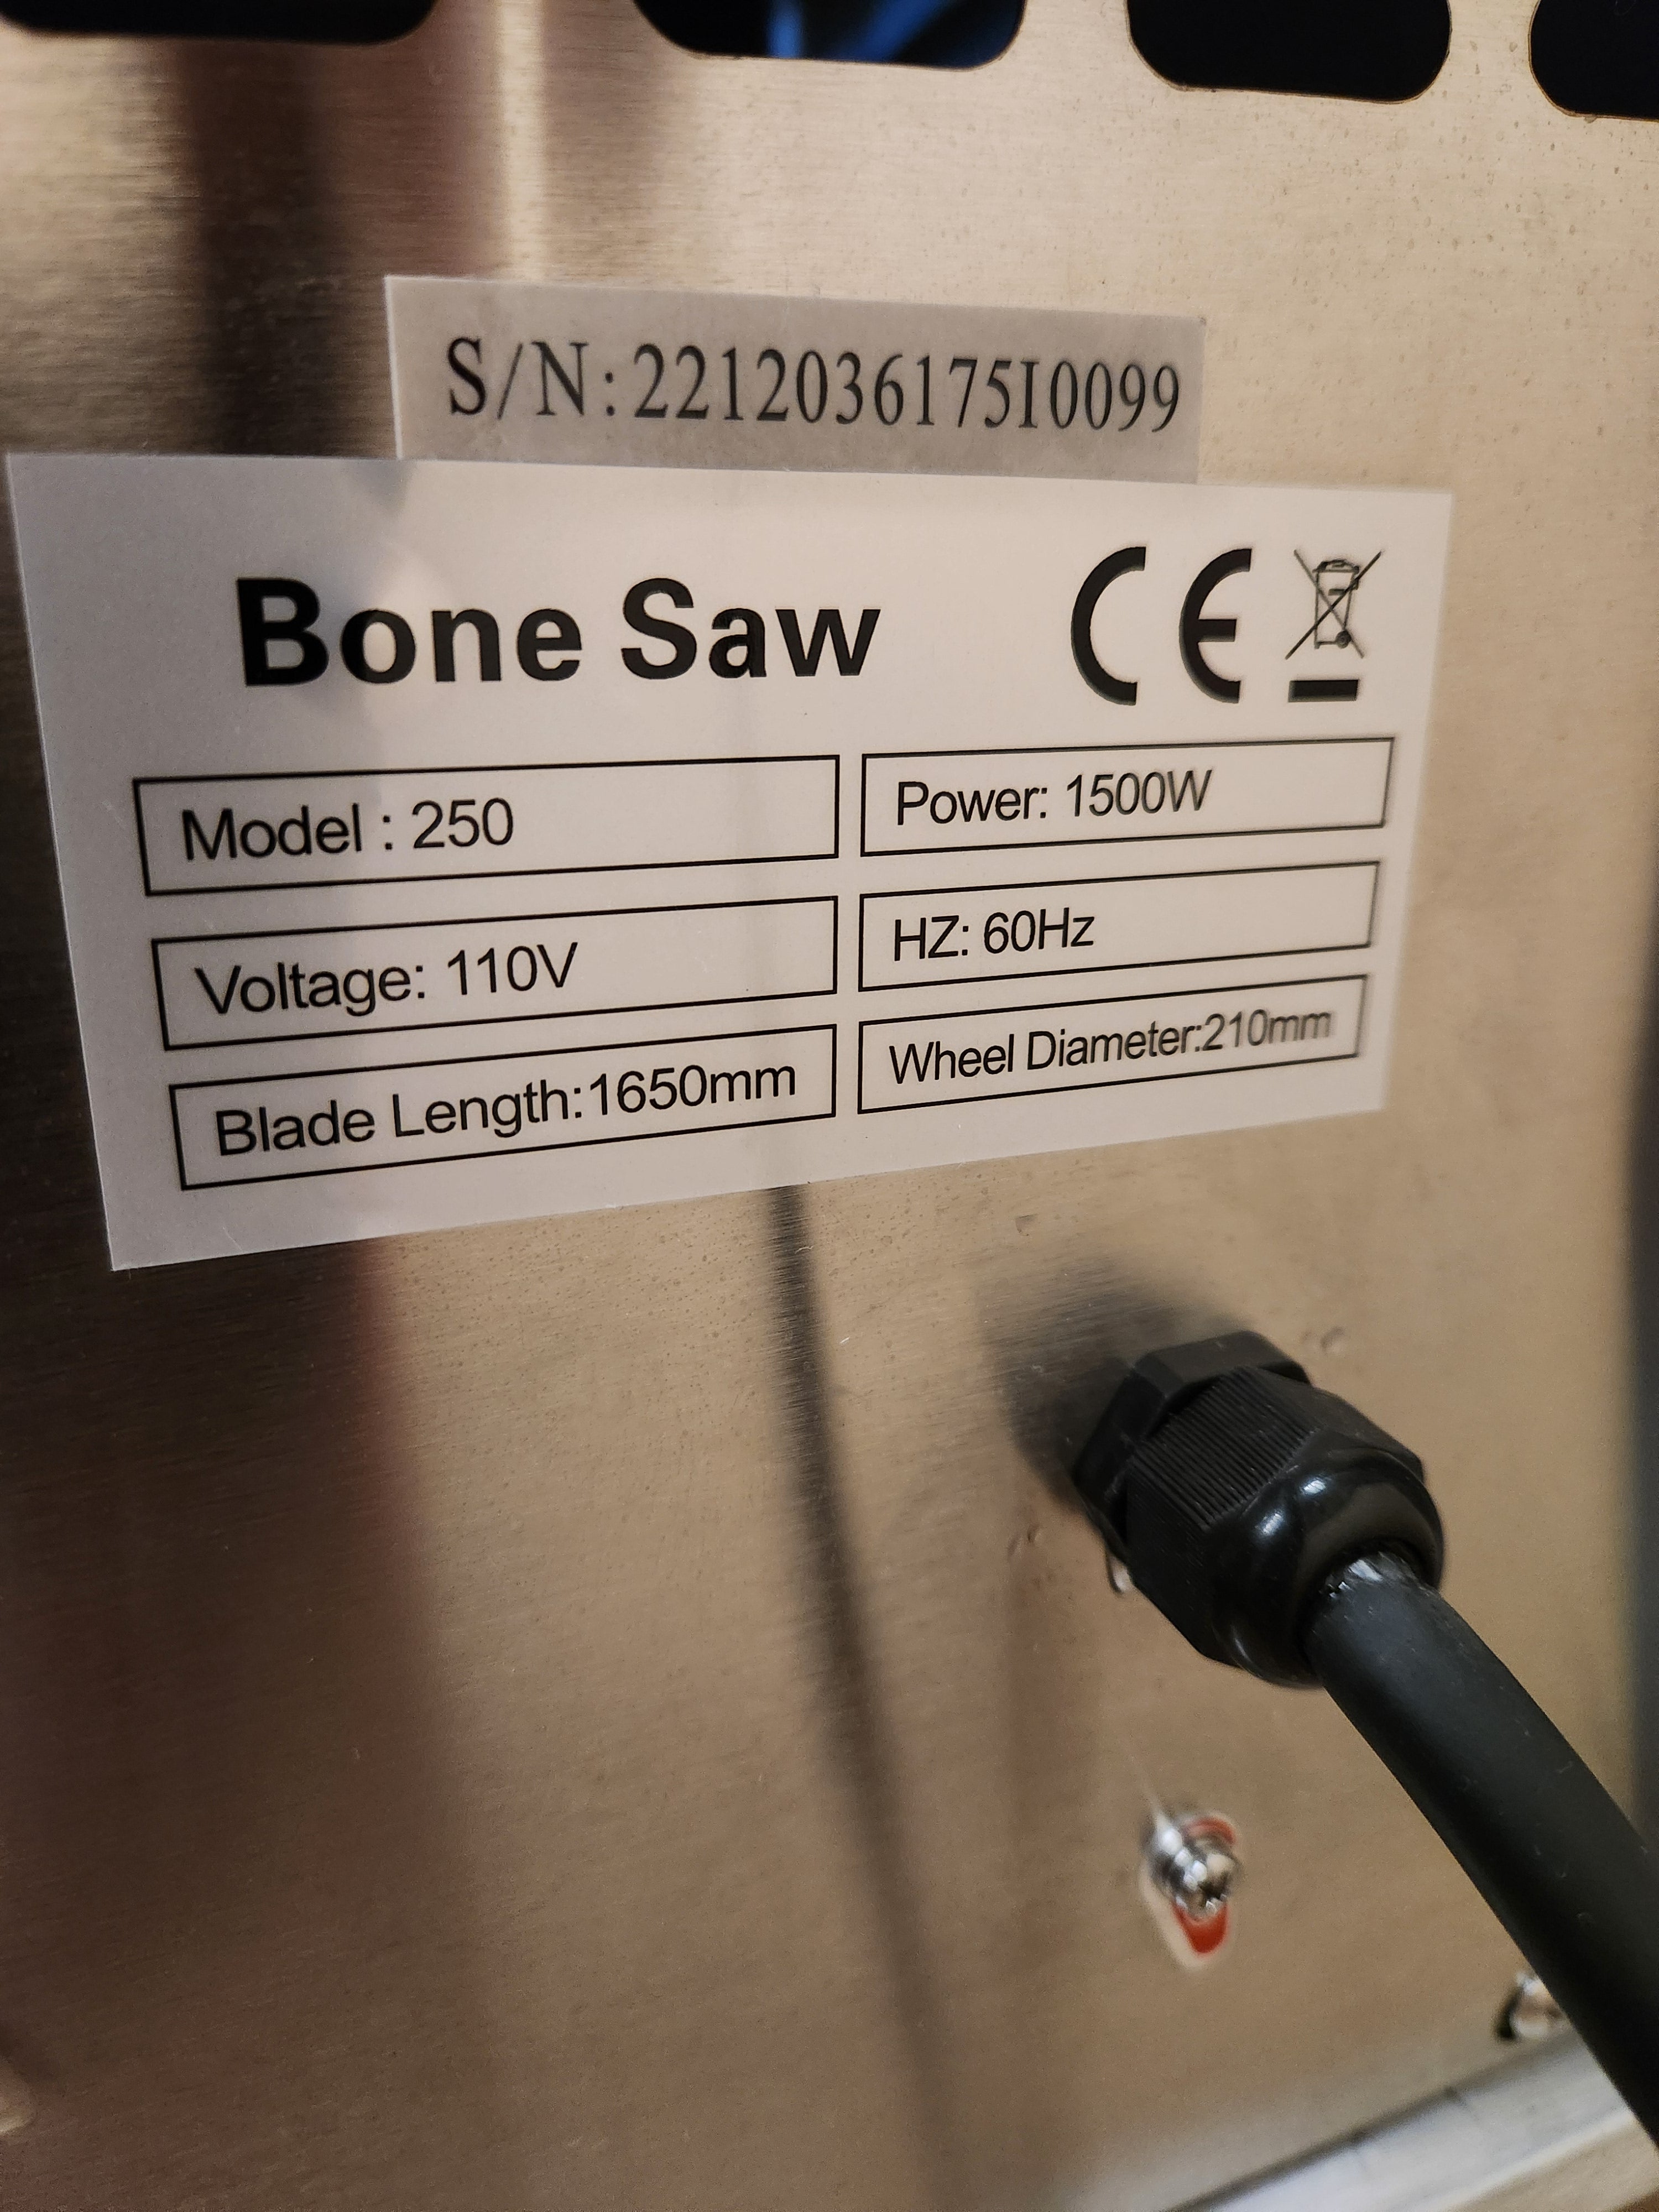 Bone Saw Machine | Vevor | Model # 250 | Ser: 221203617510099 | 110 Volt